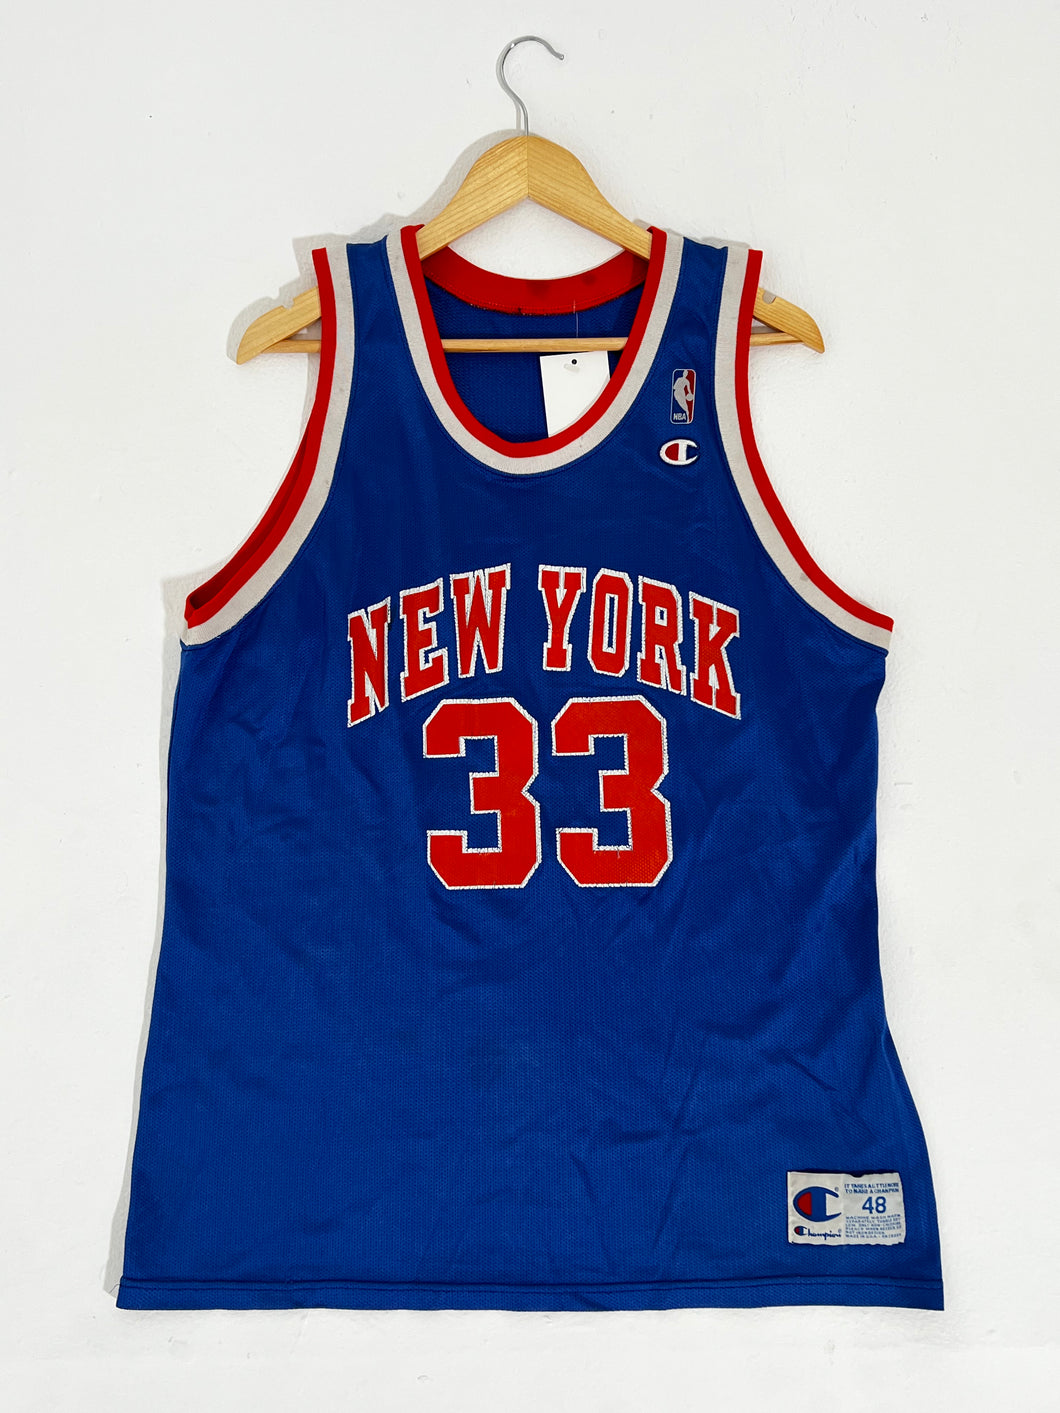 New York Knicks Store, Knicks Jerseys, Apparel, Merchandise